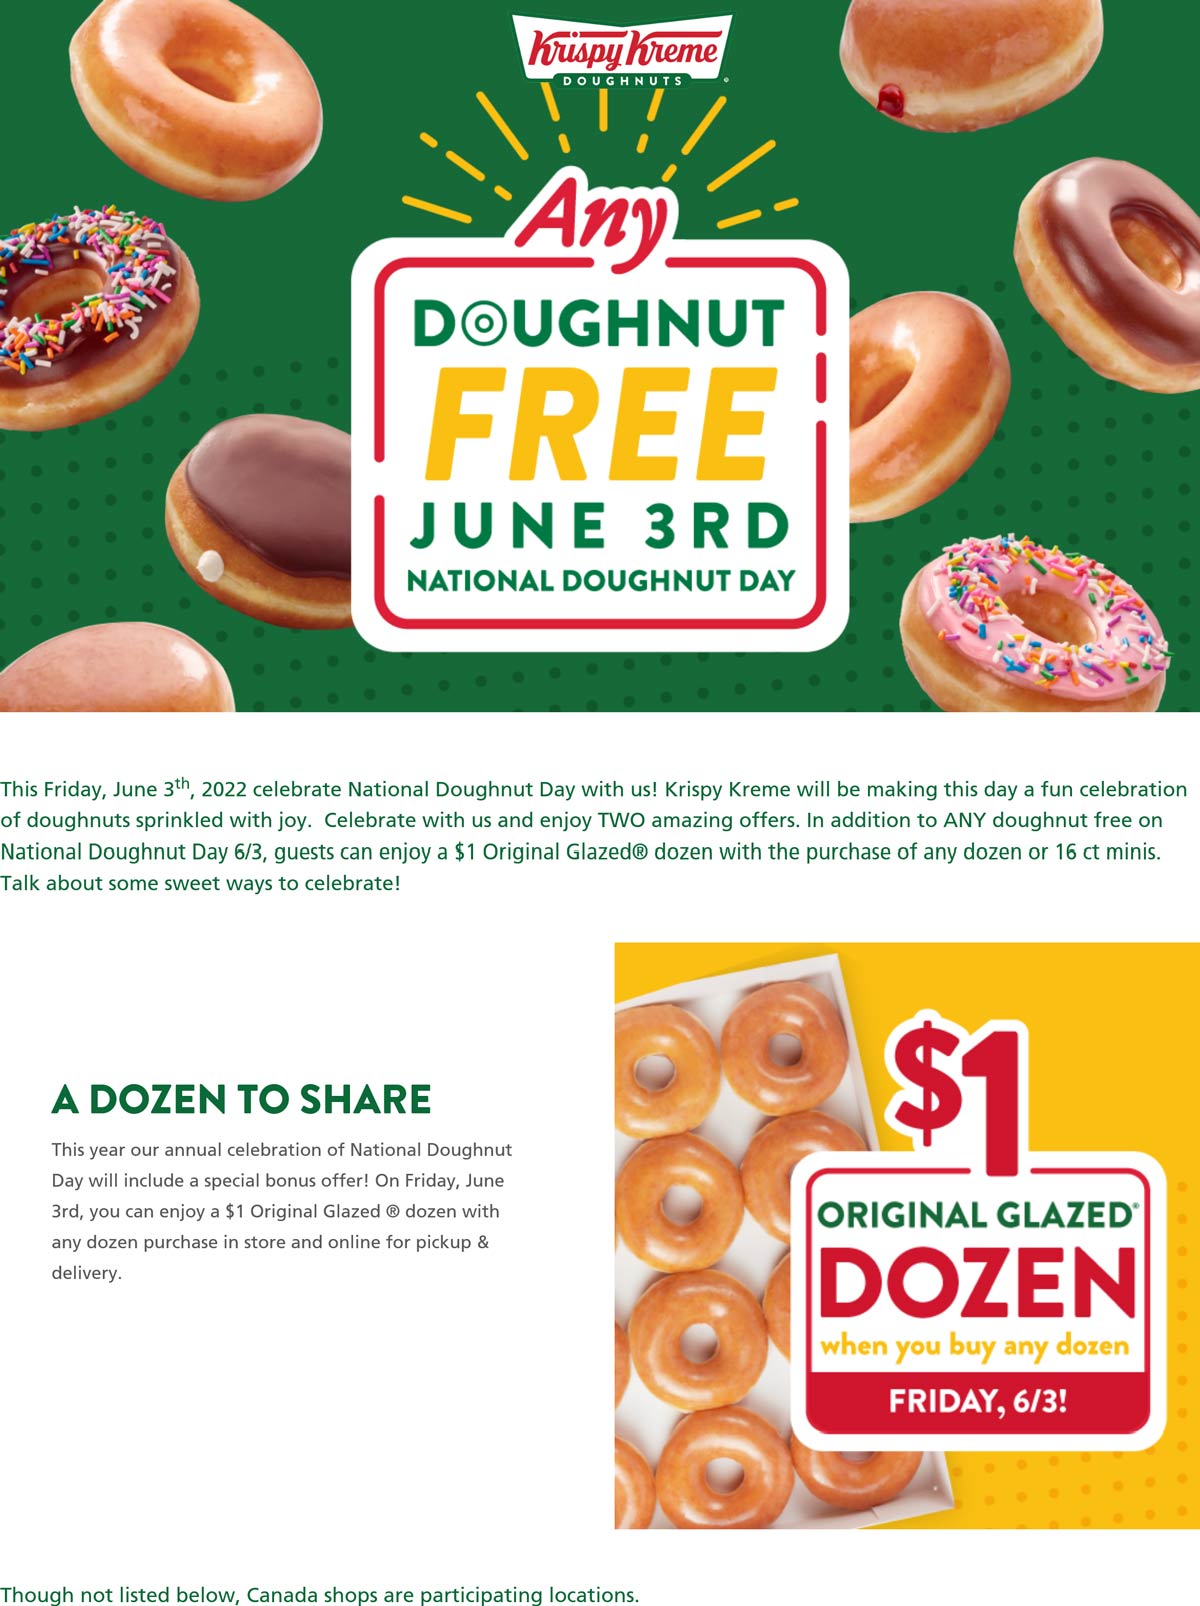 Krispy Kreme restaurants Coupon  Free doughnut & more Friday at Krispy Kreme #krispykreme 